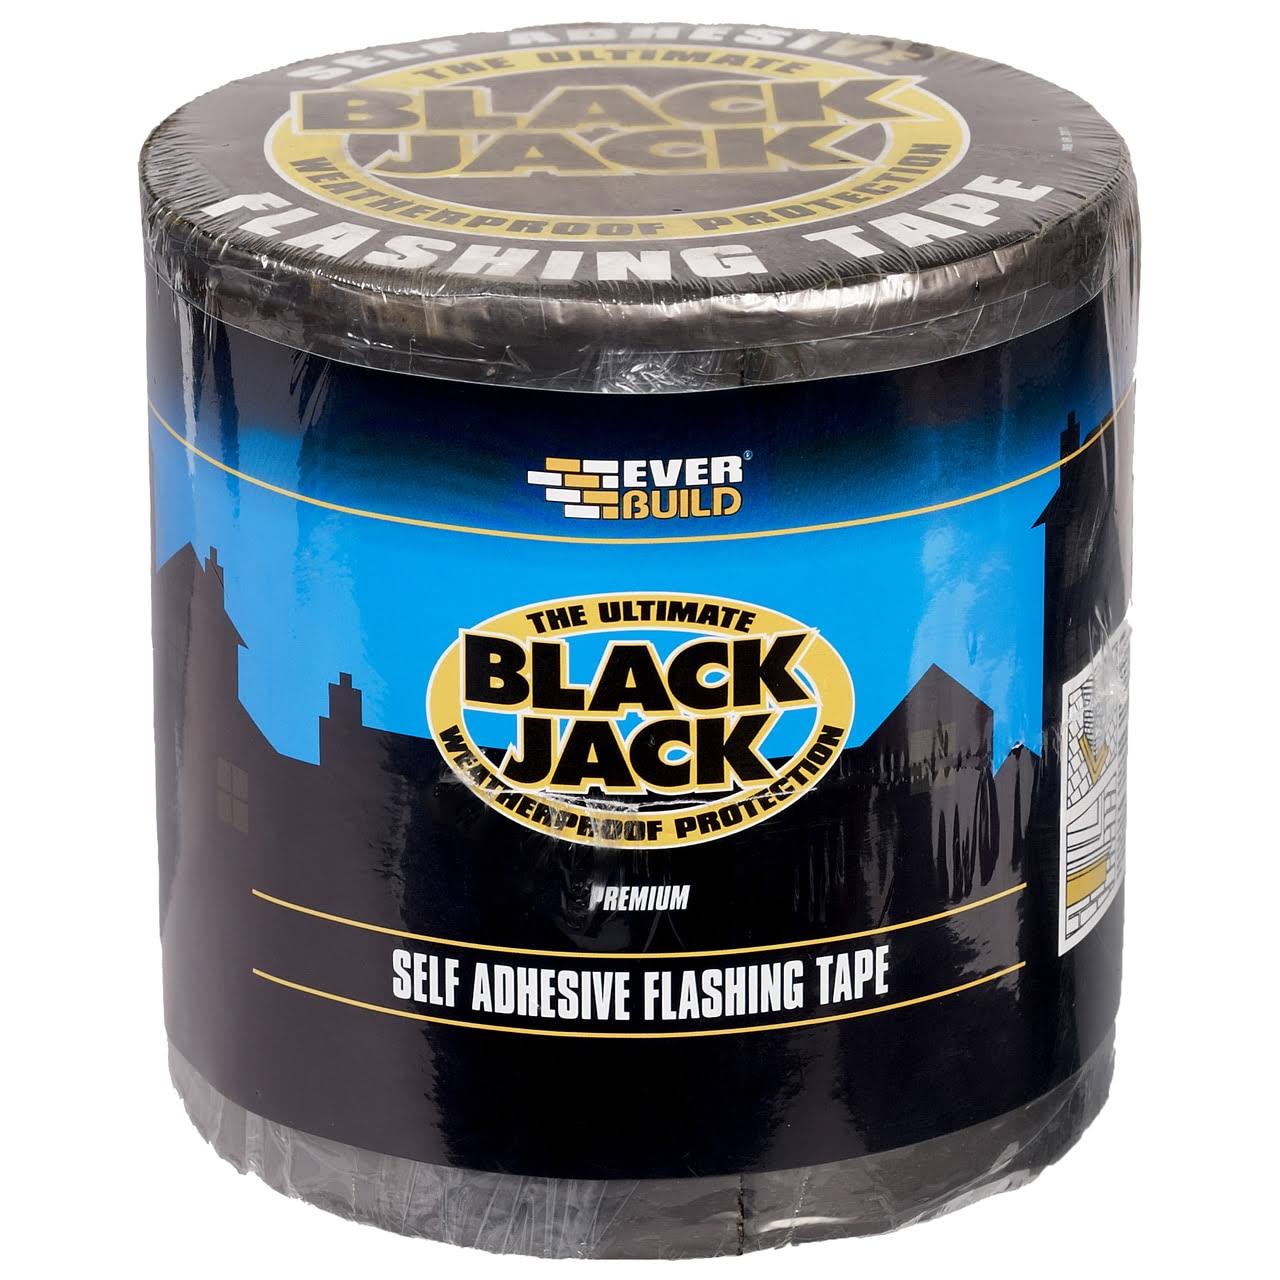 Everbuild Black Jack Self Adhesive Premium Flashing Tape - 100mm x 10m